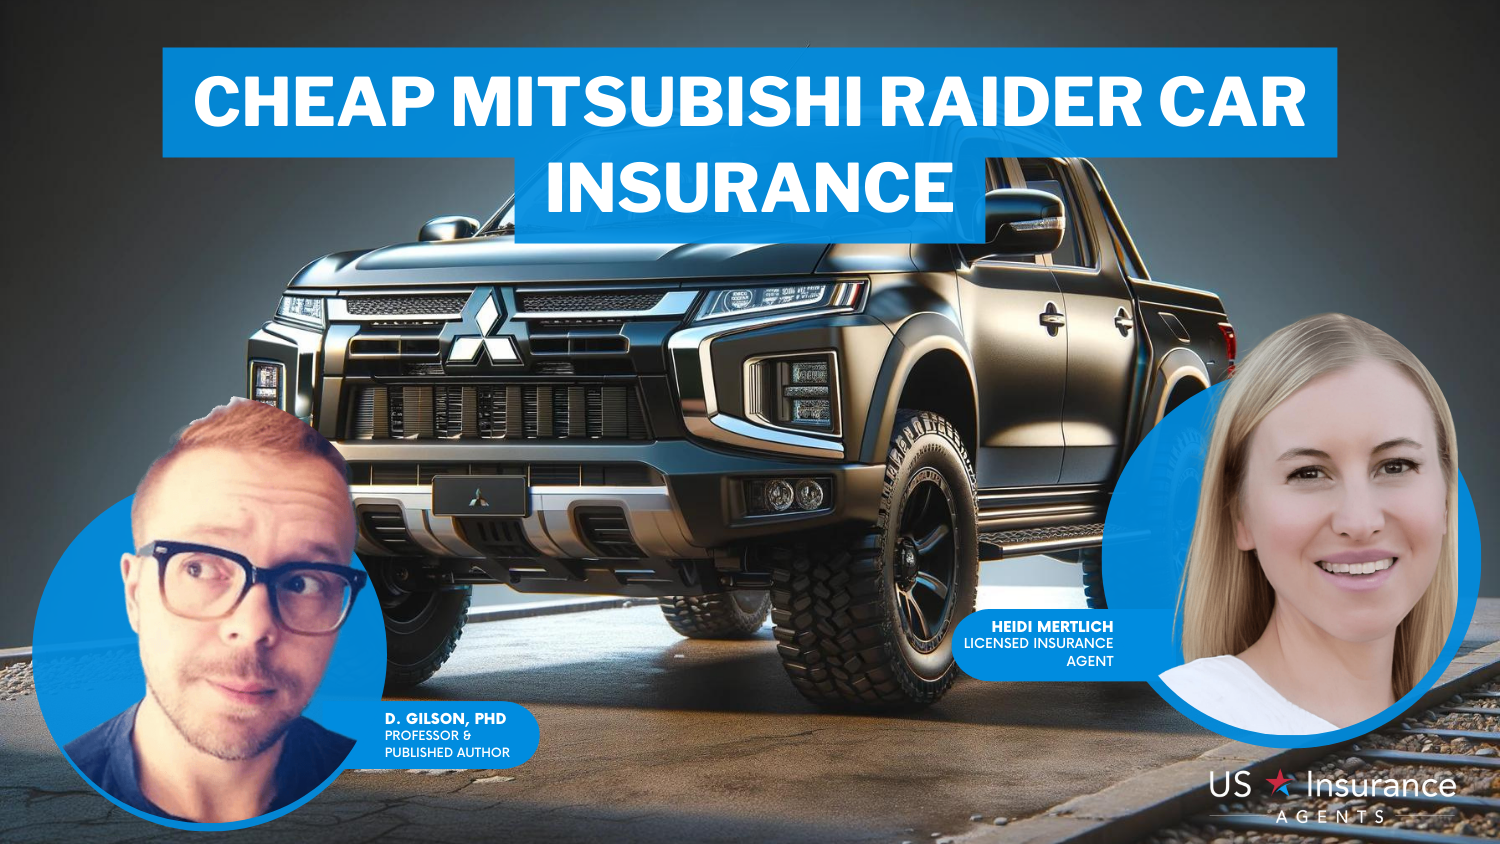 AAA, Auto-Owners, and Travelers: Cheap Mitsubishi Raider car insurance